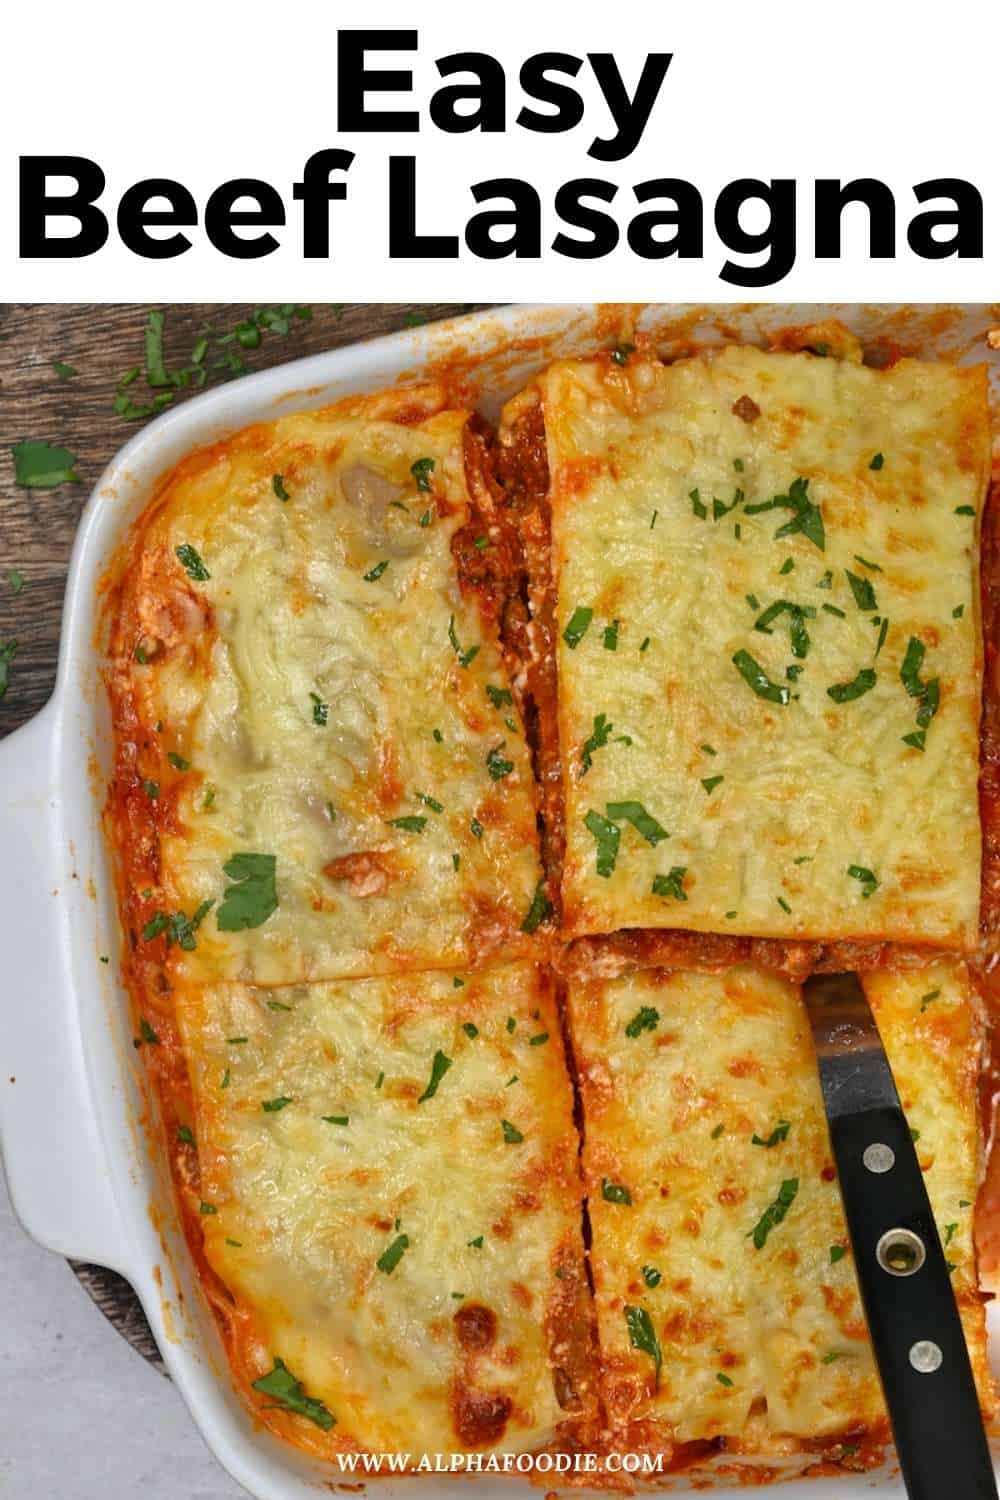 The Best Lasagna Recipe - Alphafoodie